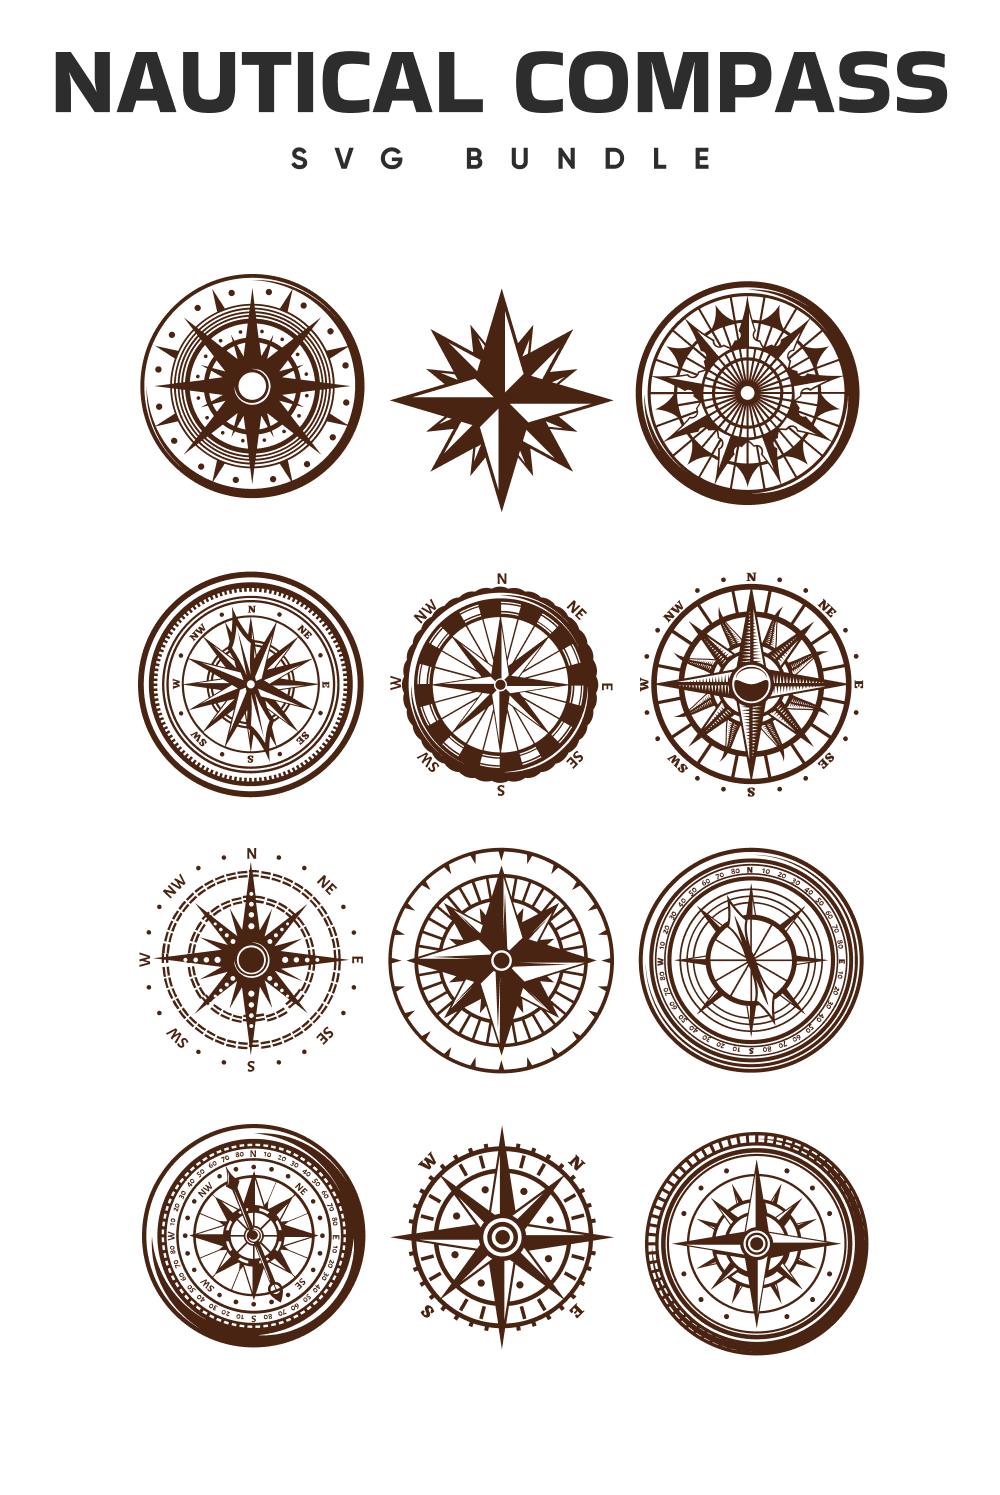 Interesting vintage nautical compass set.